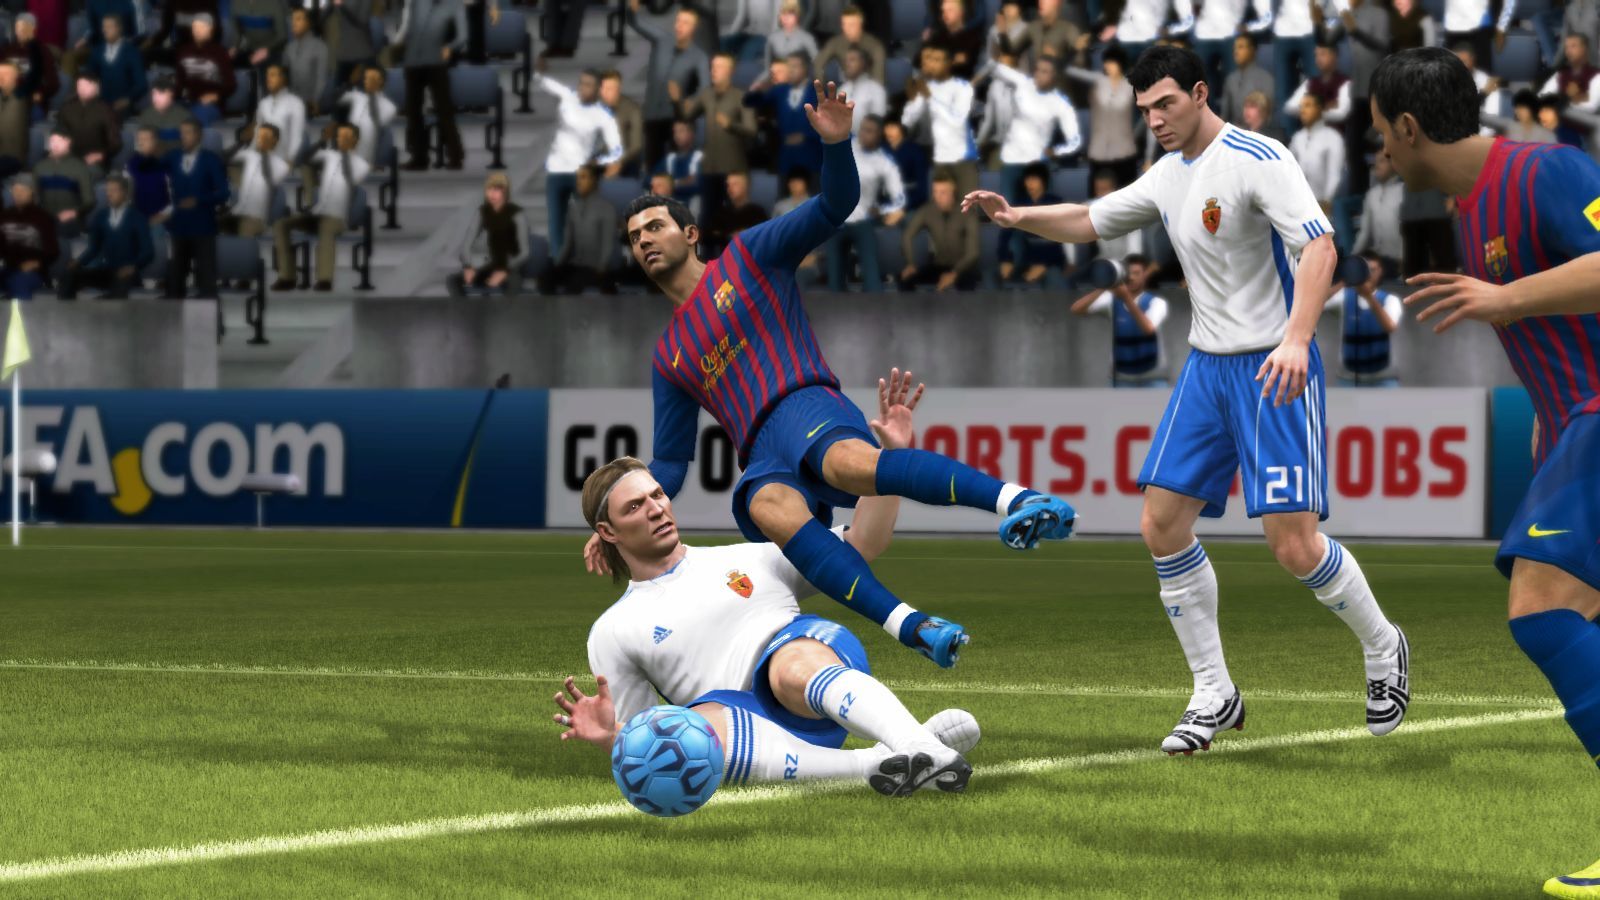 FIFA Soccer 12 - Xbox 360 Game